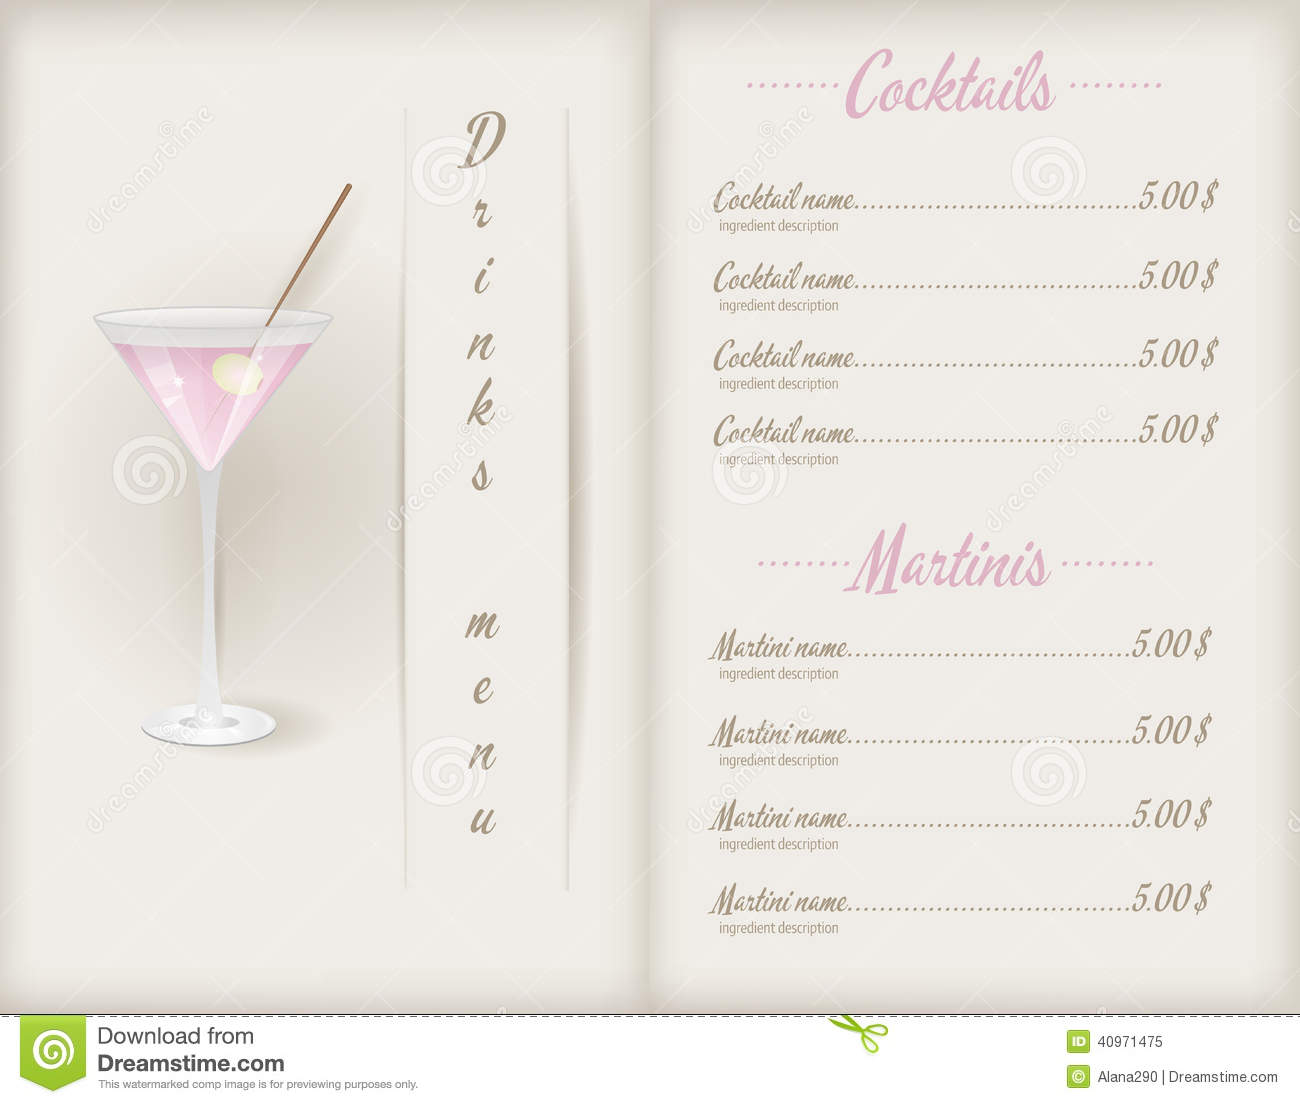 Cocktail Drinks Menu Template